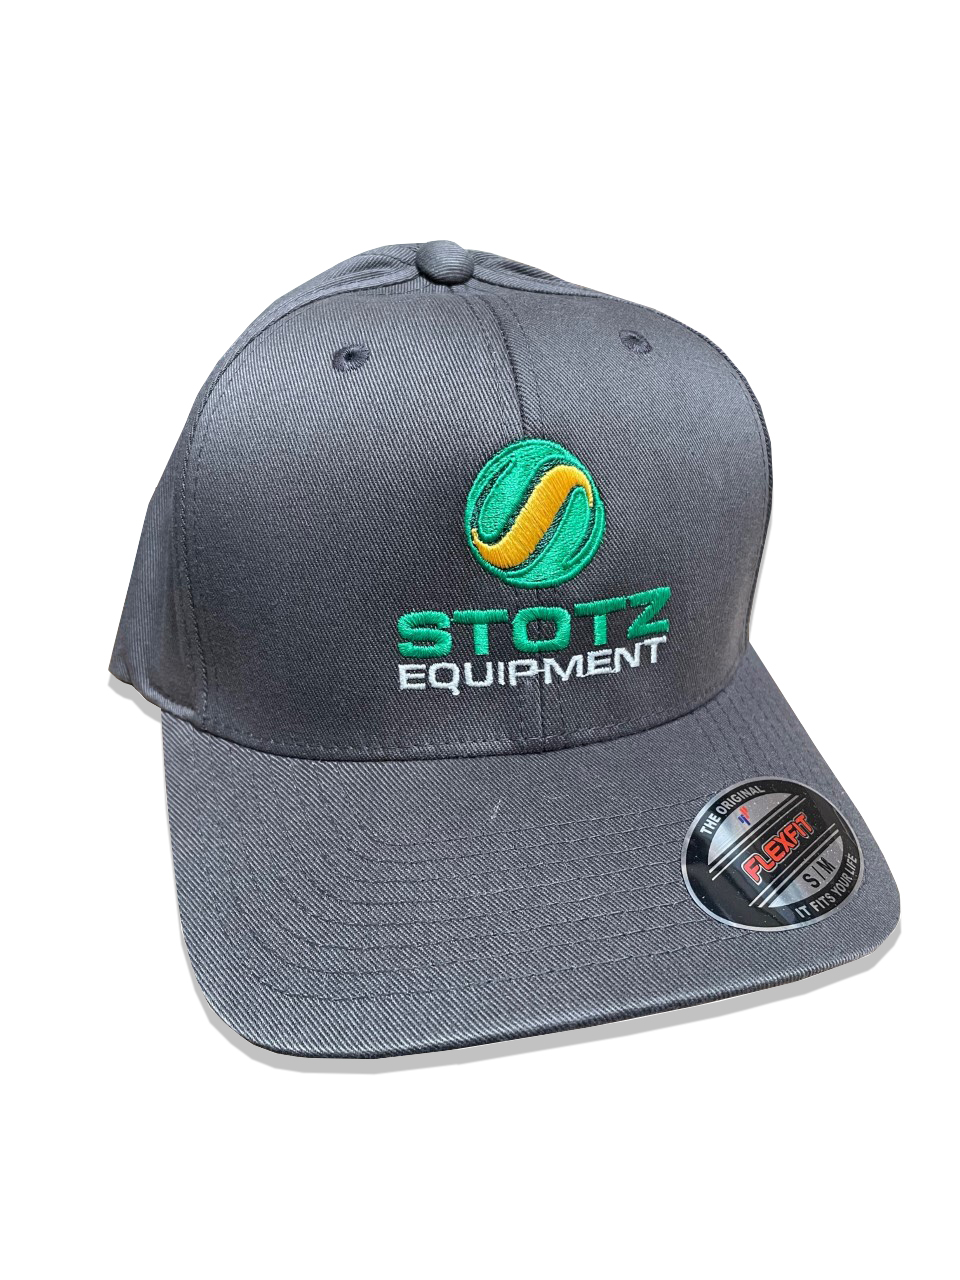 AG Grey Flexfit Center | Marketing – Hat Equipment Stotz